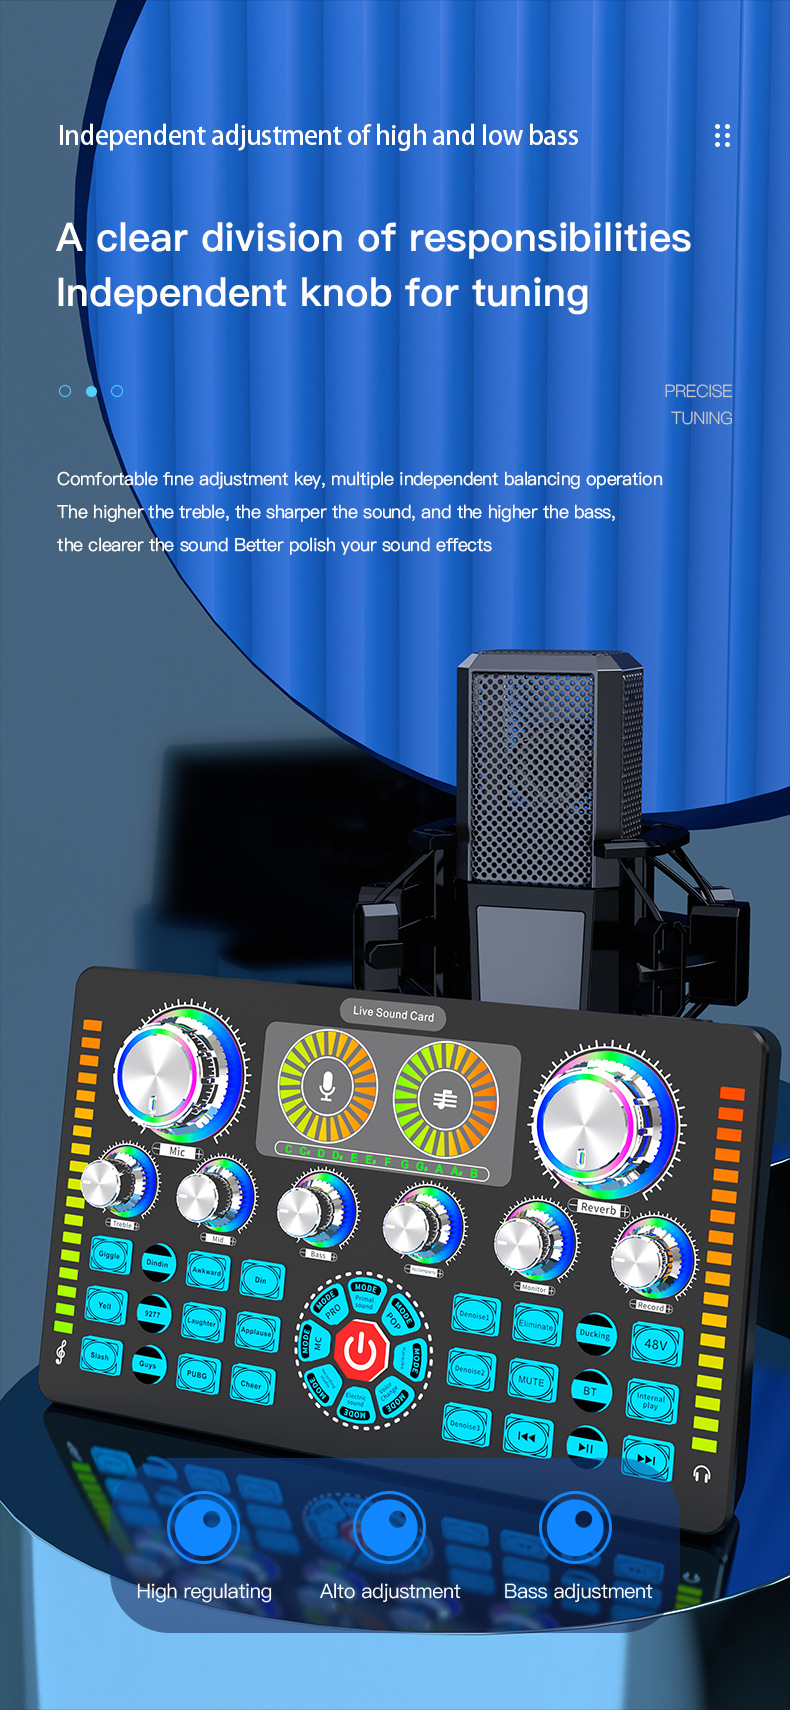 Q7 Live Sound Card Sound Mixer Podcast Karaoke Home Studio Record Professional Soundcard bluetooth Microphone Mixer Voice Change